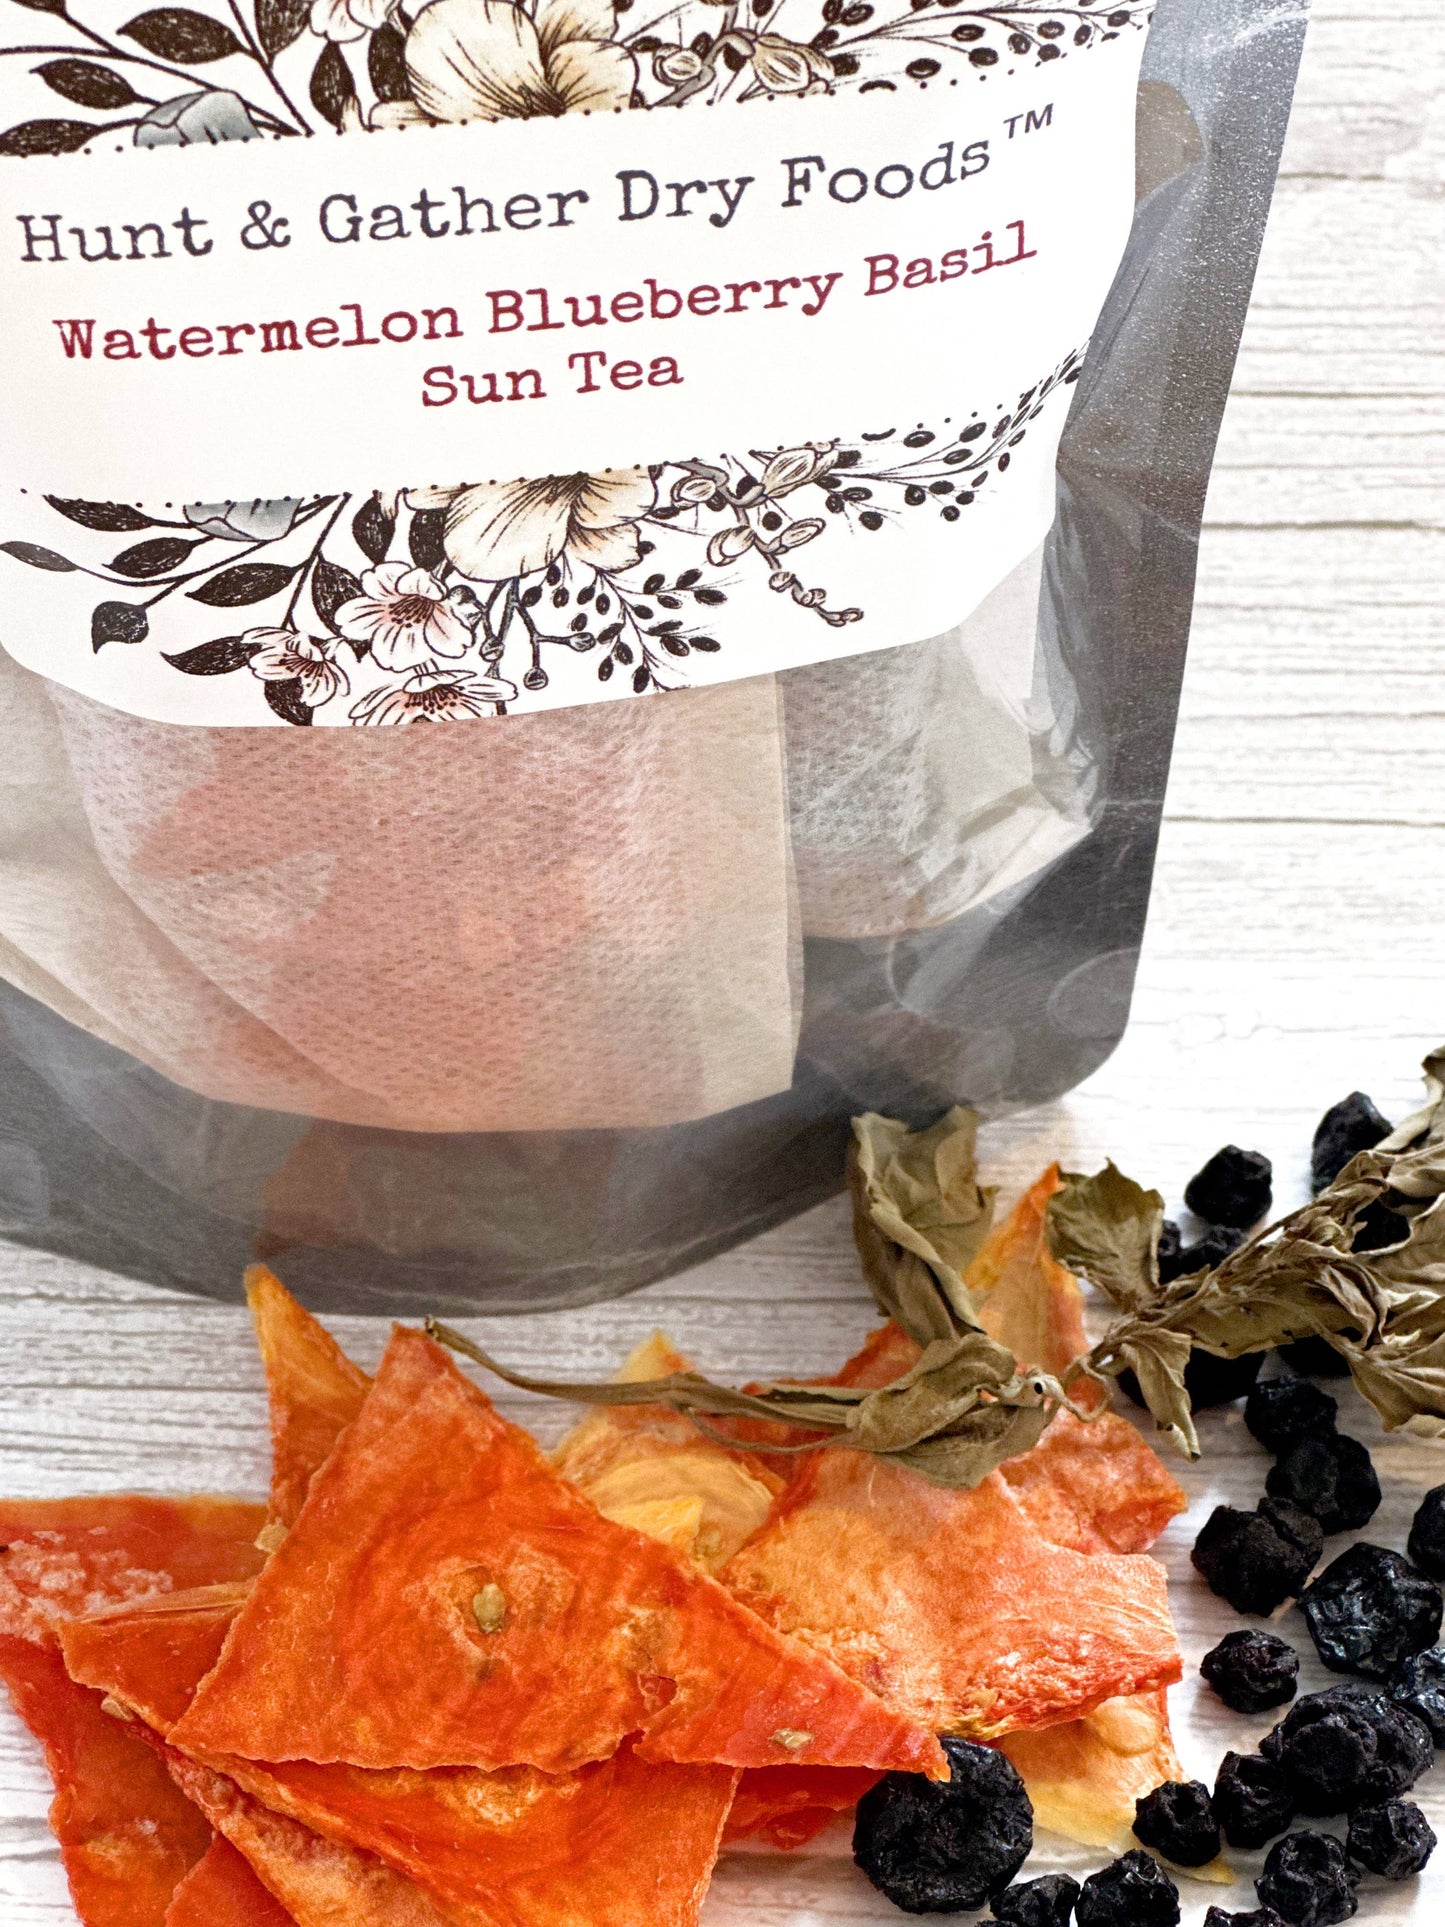 Watermelon, Blueberry & Basil Sun Tea Kit